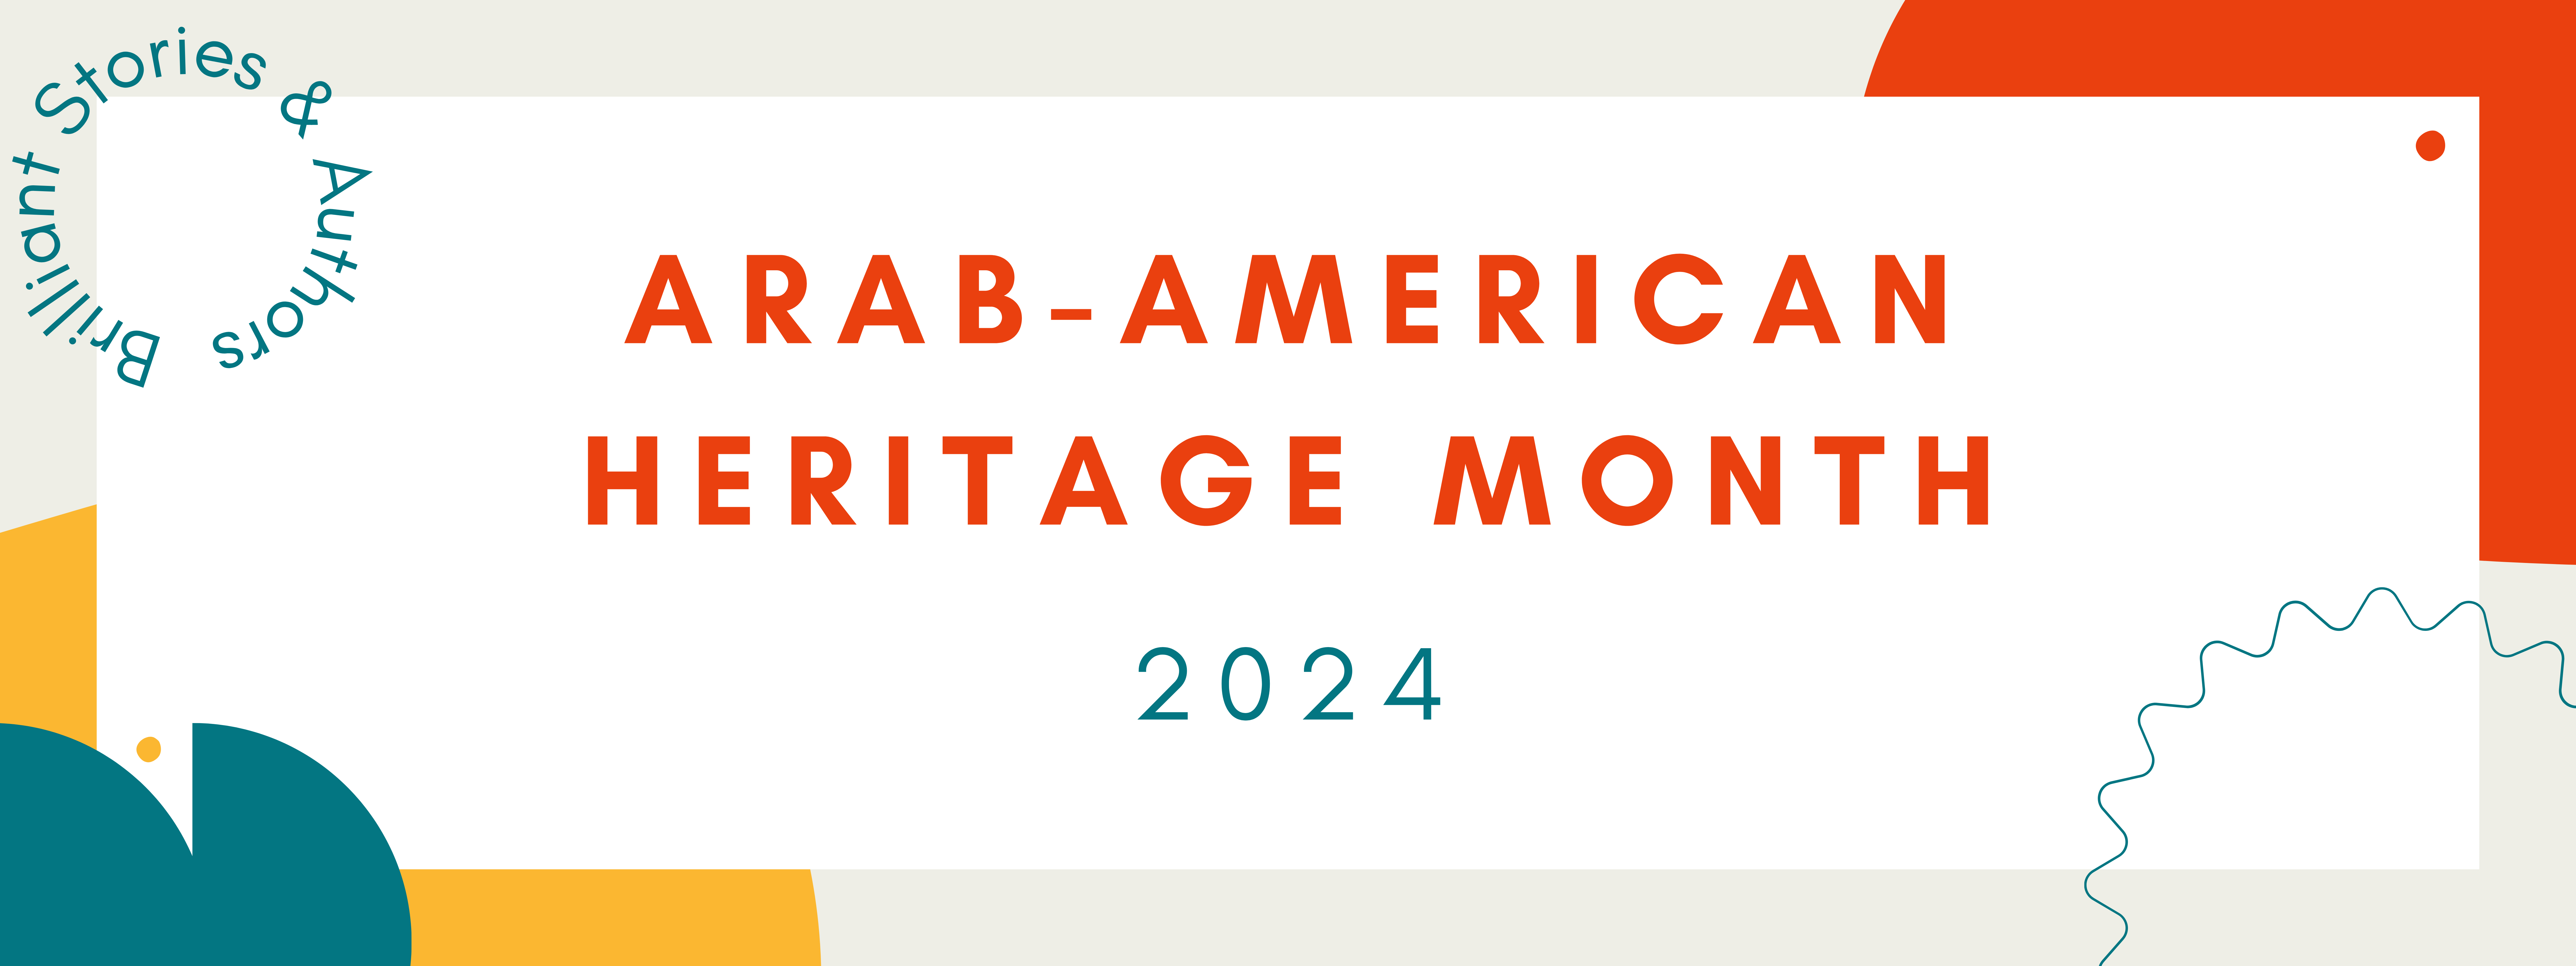 Arab American Heritage Month 2024